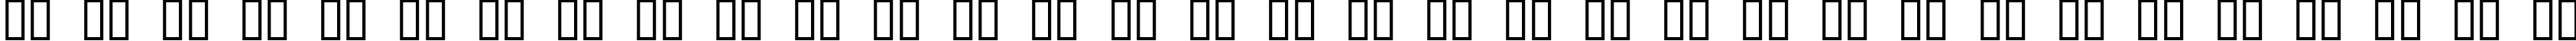 Пример написания русского алфавита шрифтом Antimony Blue